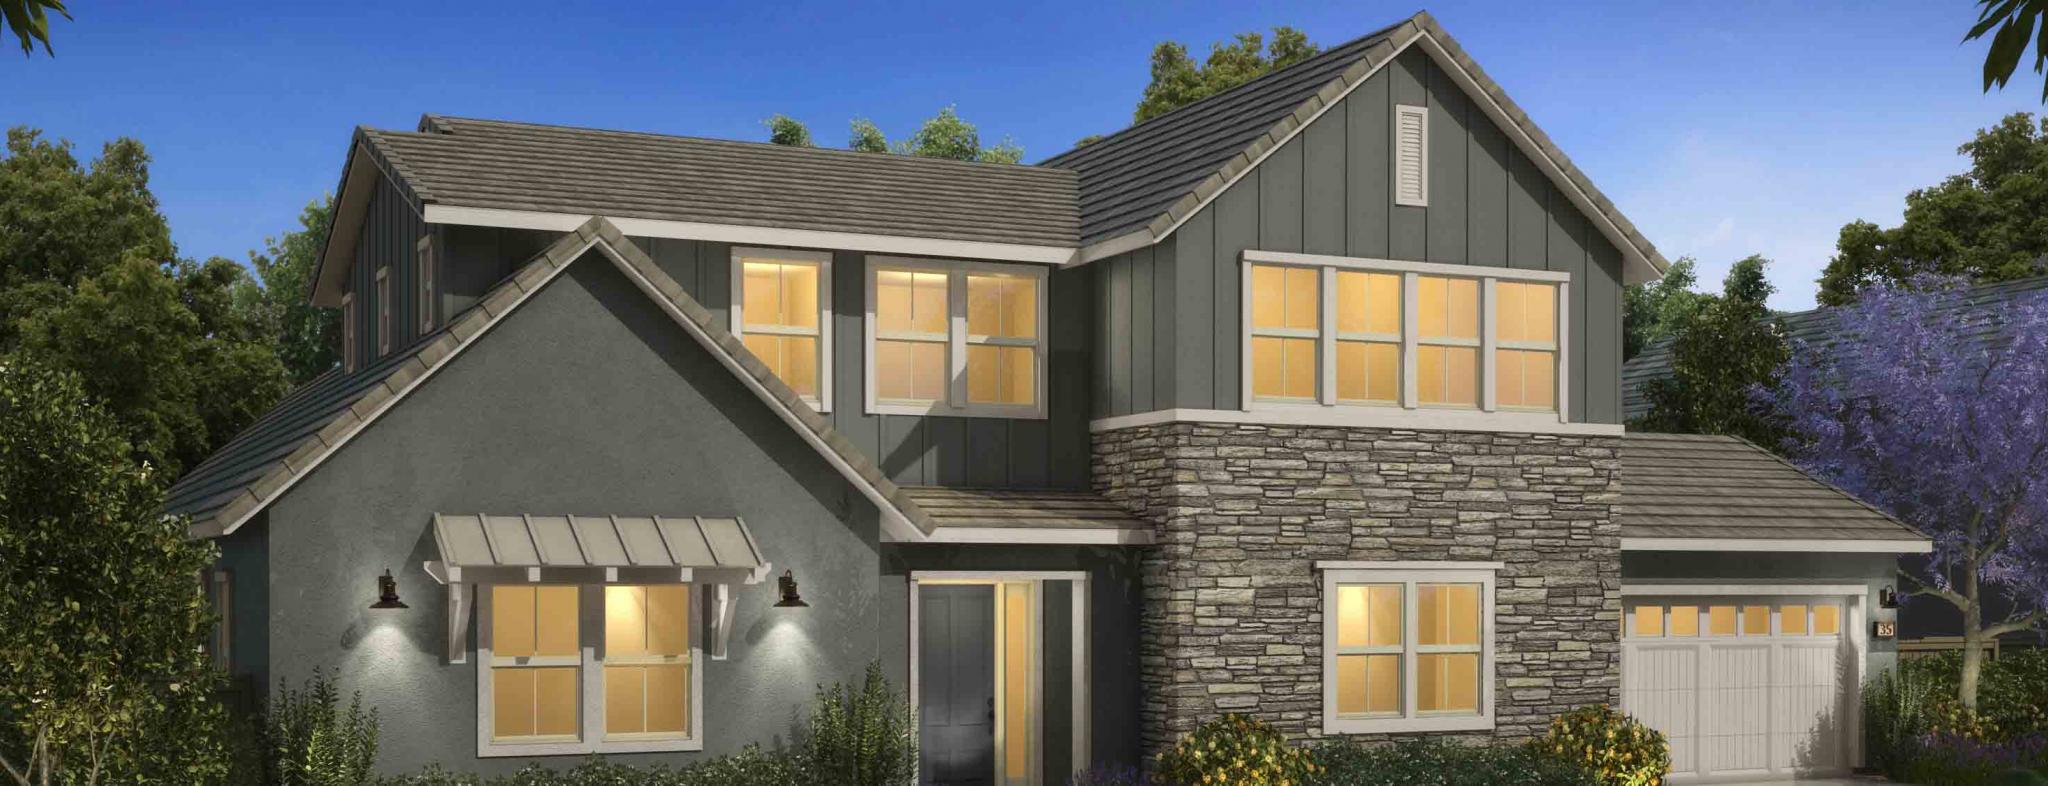 The New Home Company Announces Topaz at Esencia on Rancho Mission Viejo